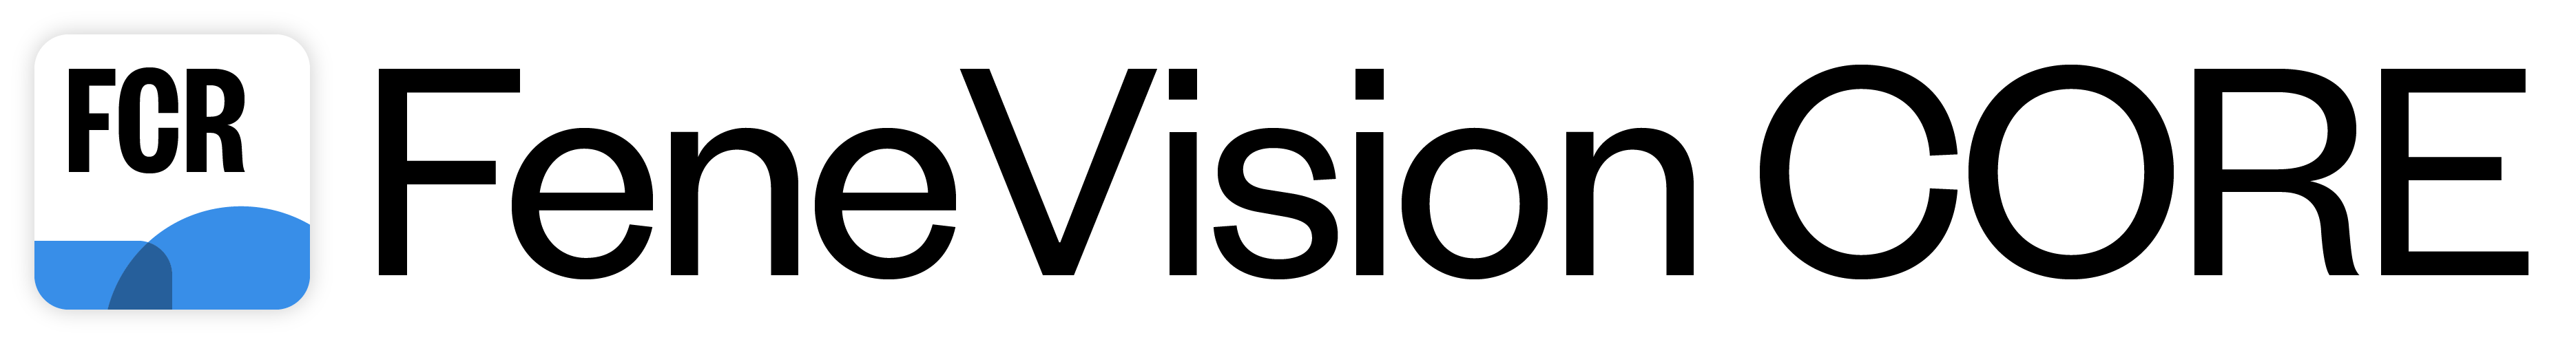 Fenevision Core logo